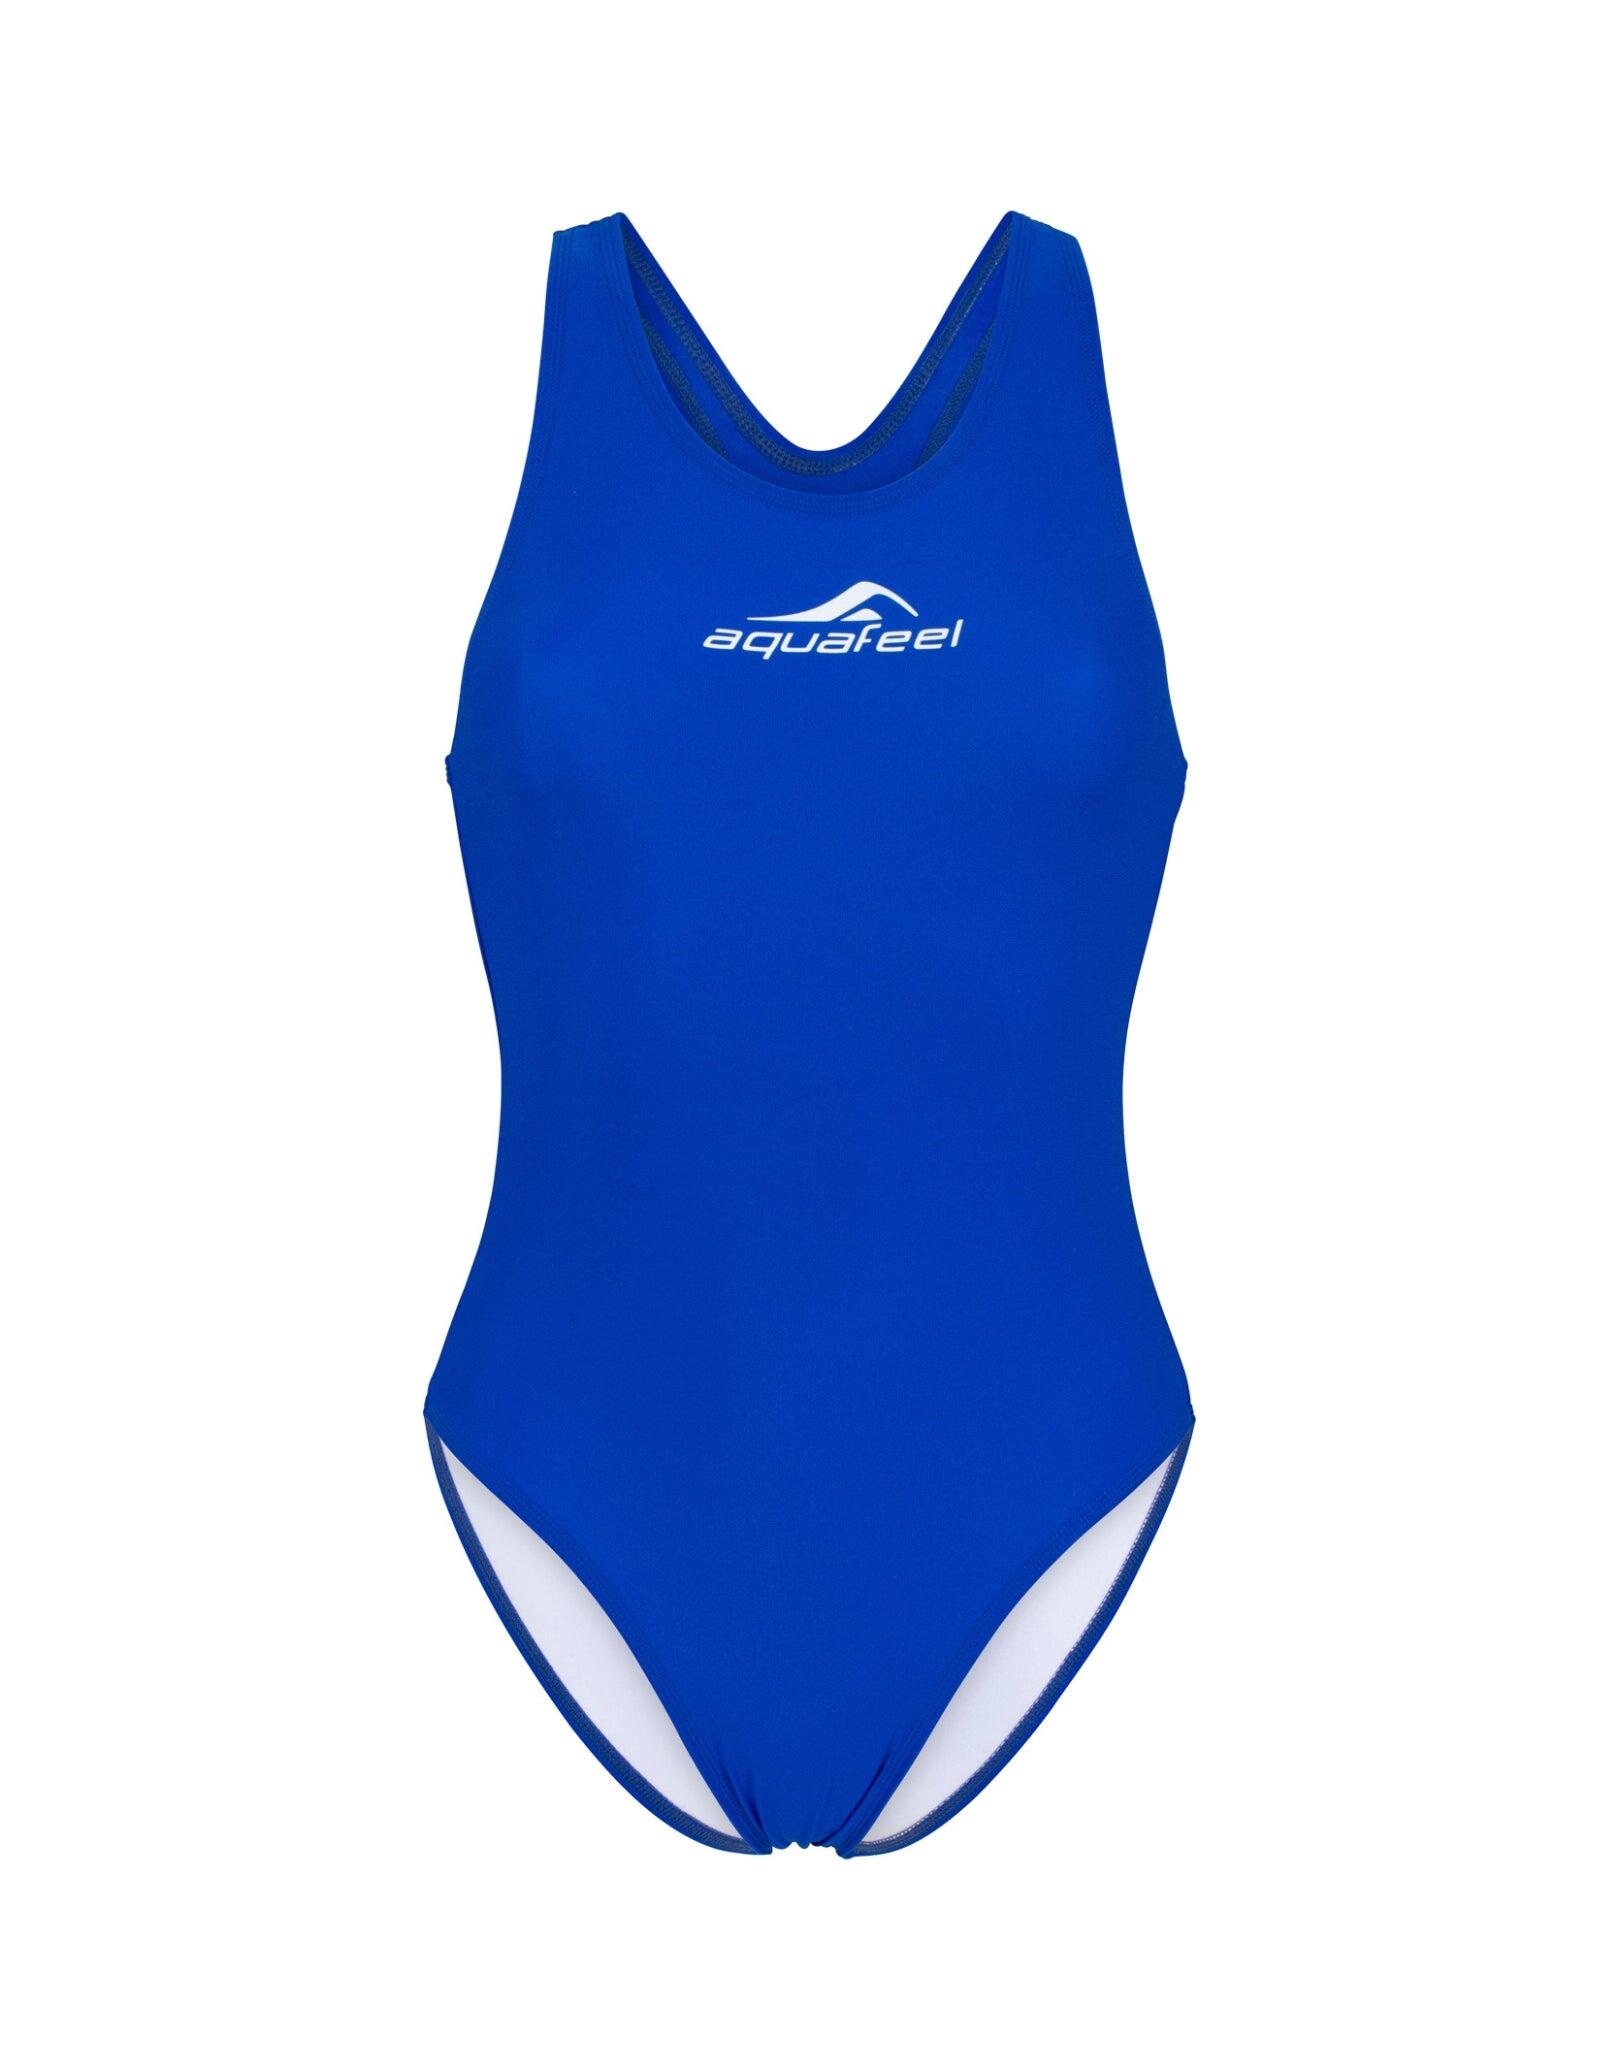 AQUAFEEL Aquafeel Classic Open Back Ladies Swimsuit - Royal Blue